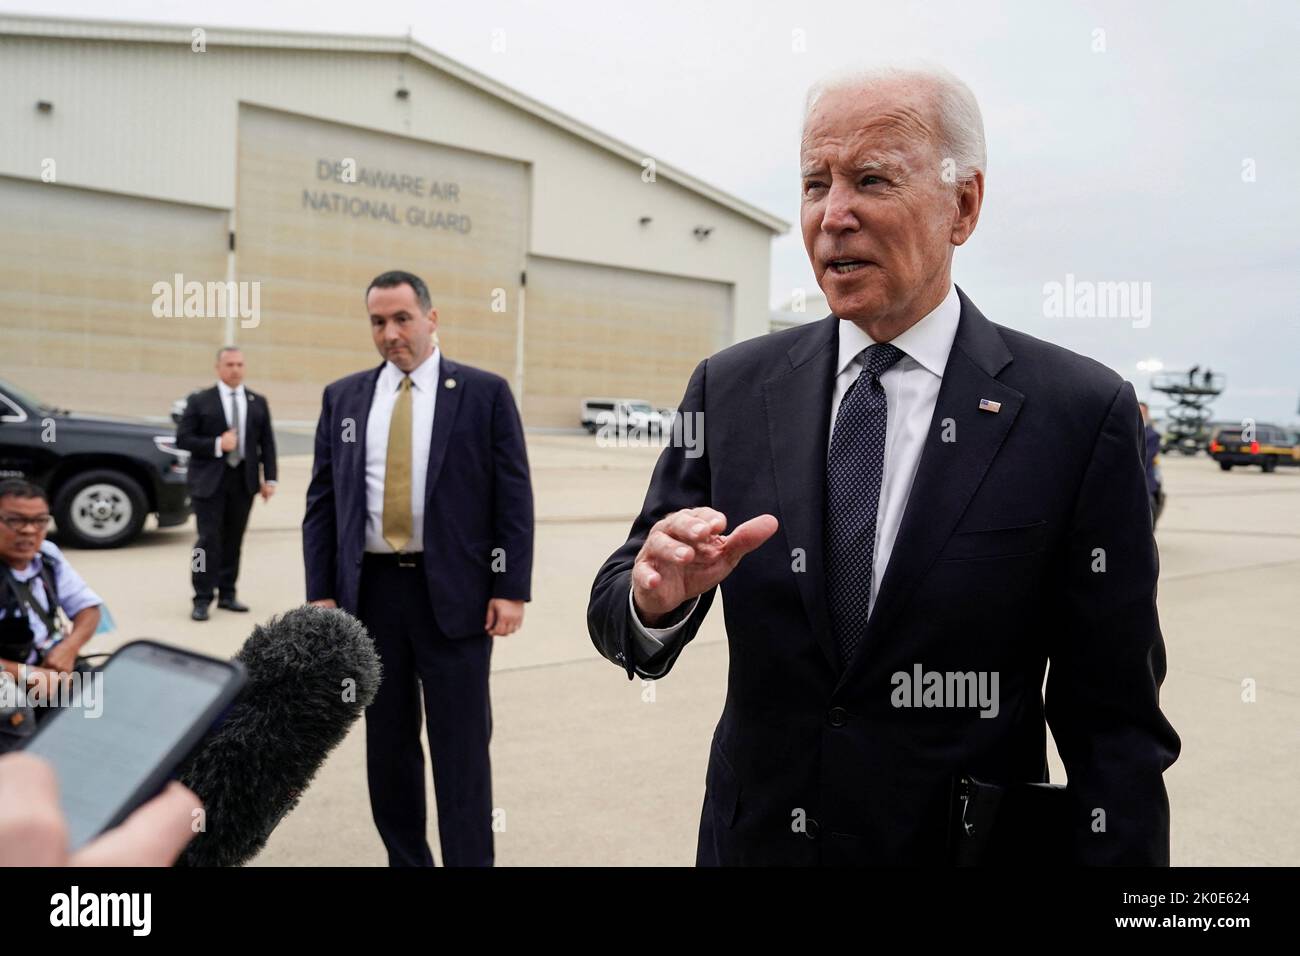 U.S. President Joe Biden speaks to media before boarding Air Force One as he departs for Washington from New Castle, Delaware, U.S., September 11, 2022.      REUTERS/Joshua Roberts Stock Photo